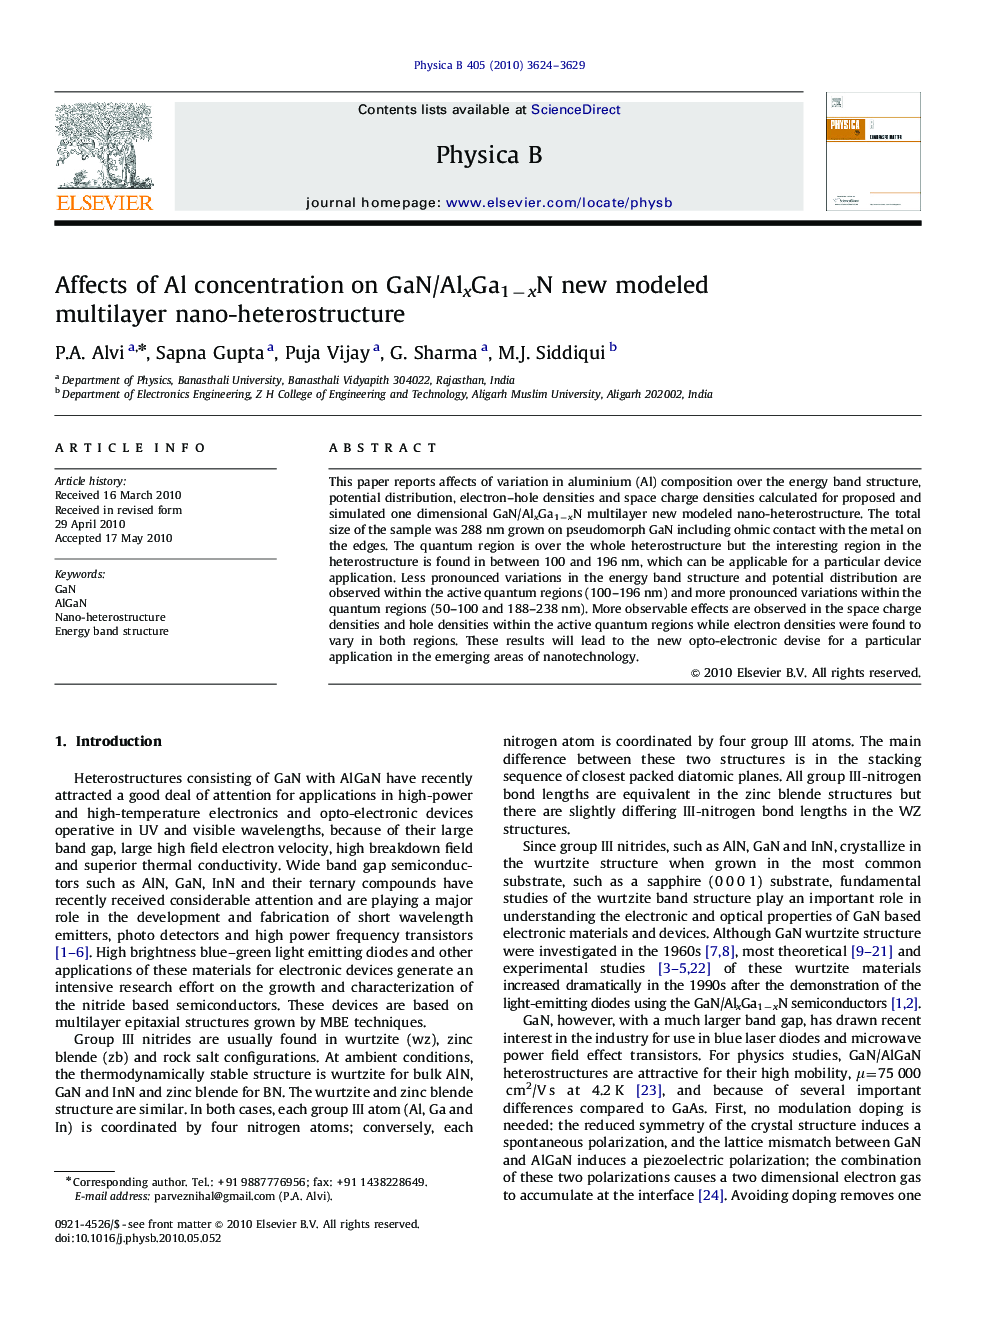 Affects of Al concentration on GaN/AlxGa1âxN new modeled multilayer nano-heterostructure